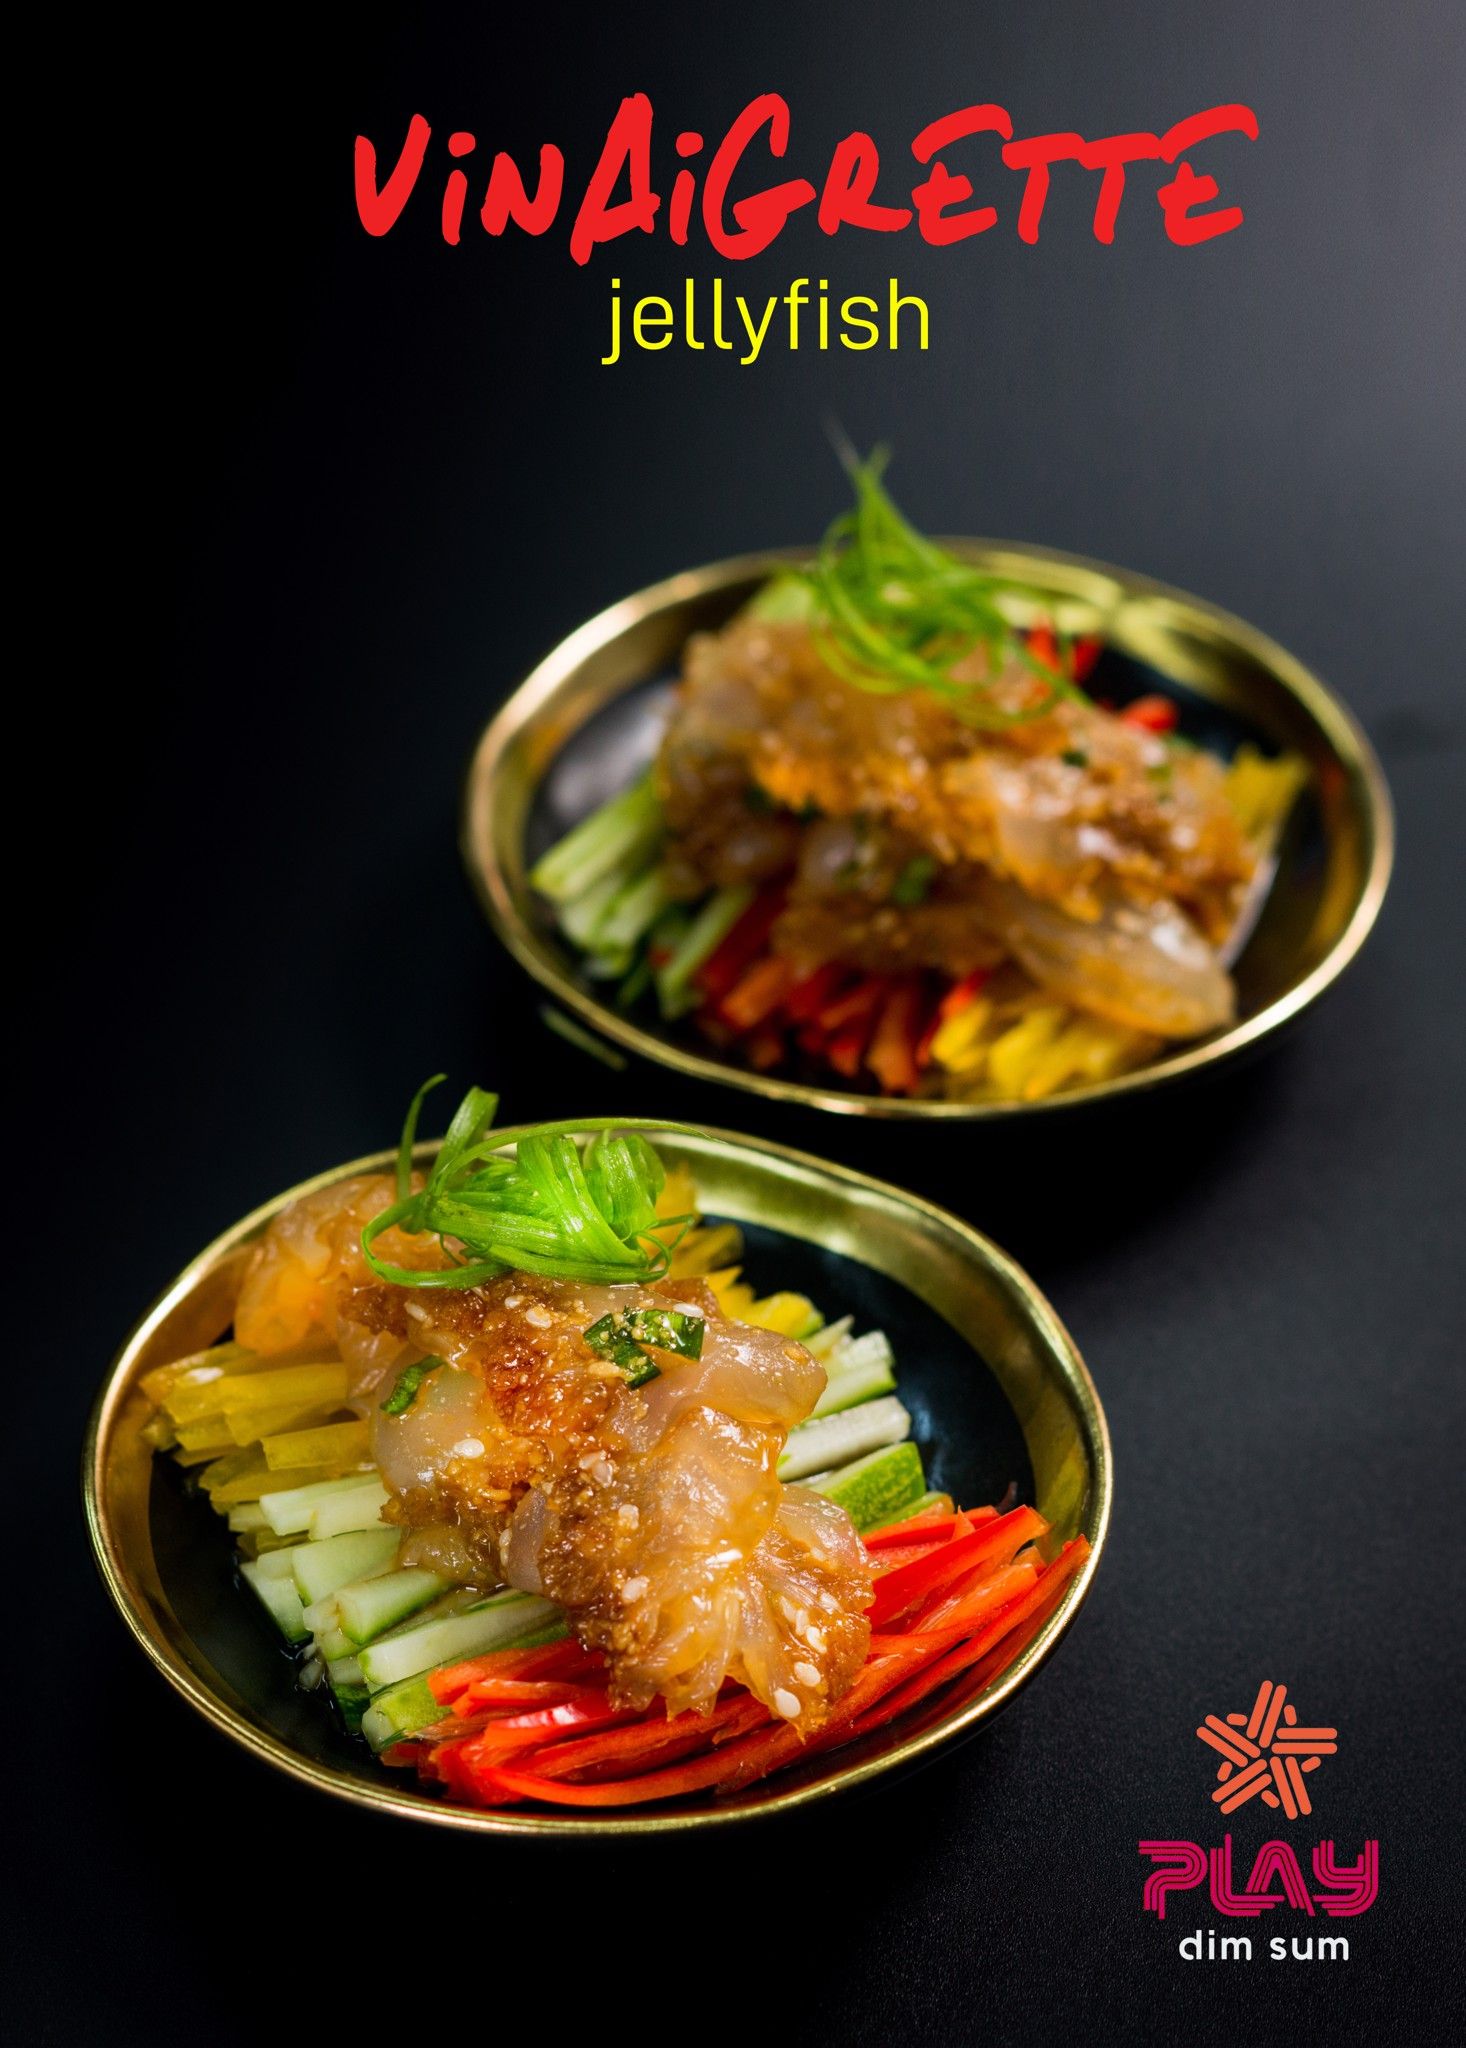  Gỏi sứa chua cay/陳醋海蜇/Aged vinaigrette jellyfish 